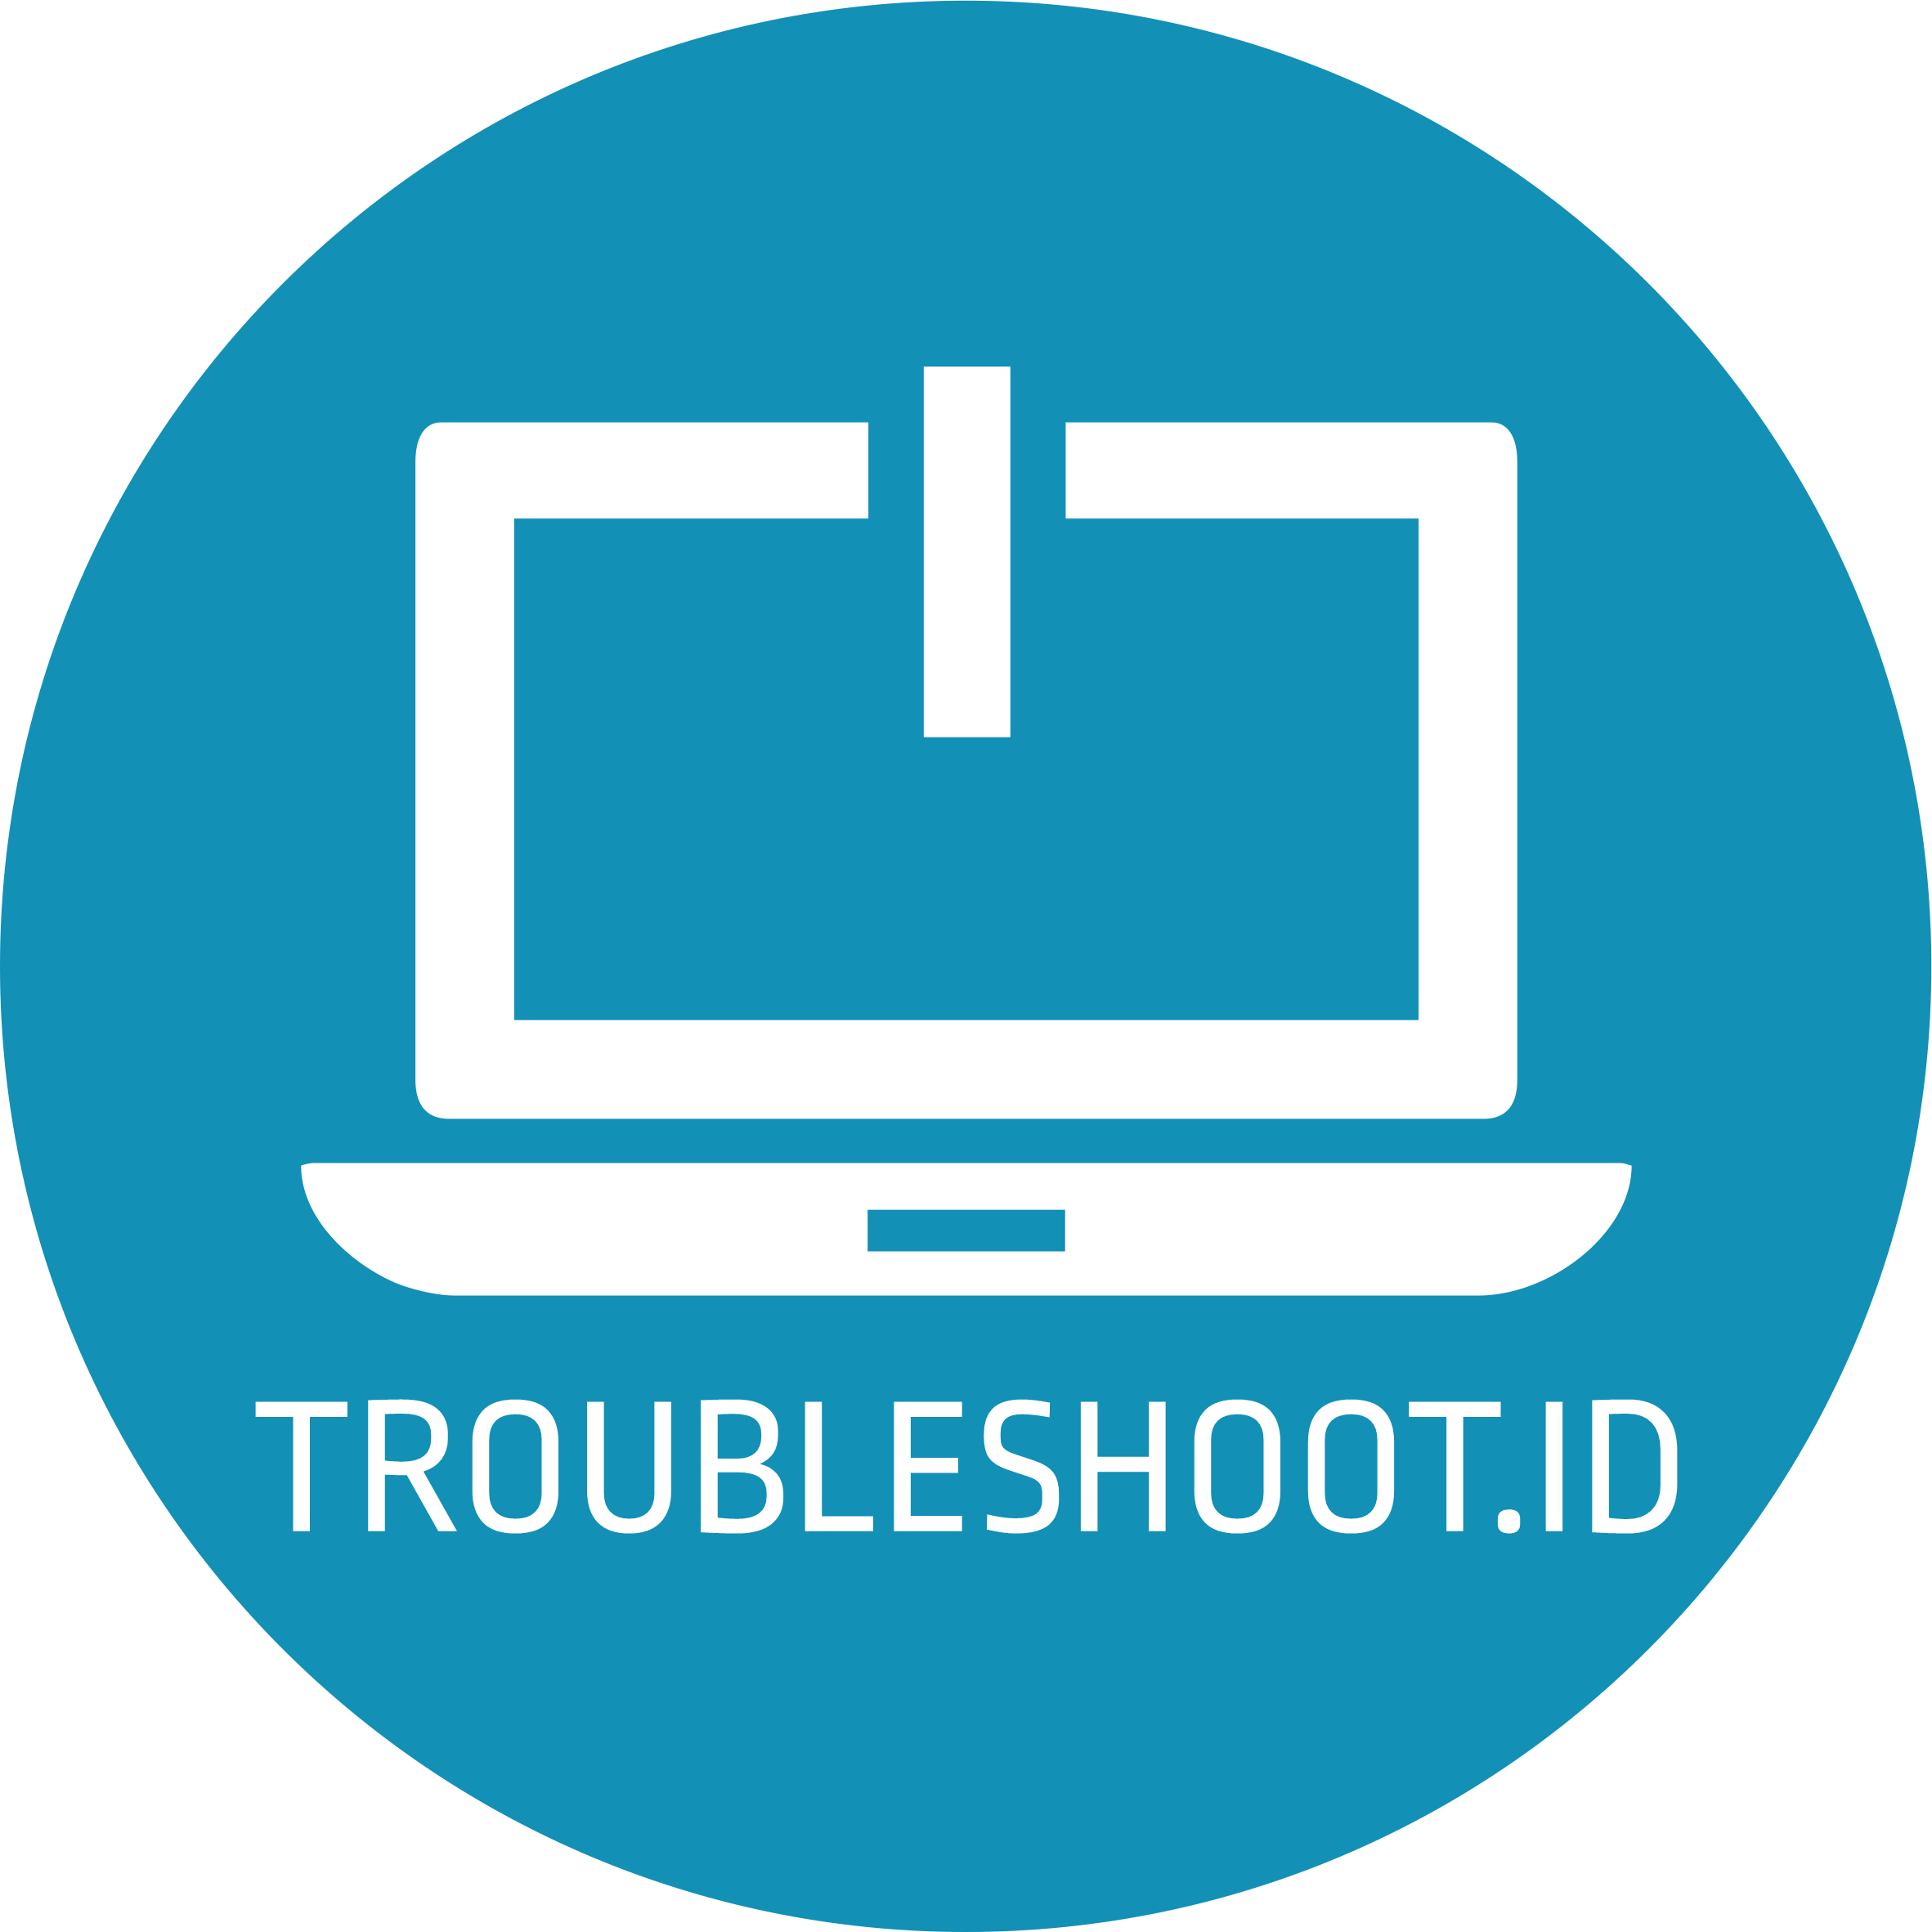 Troubleshoot.id